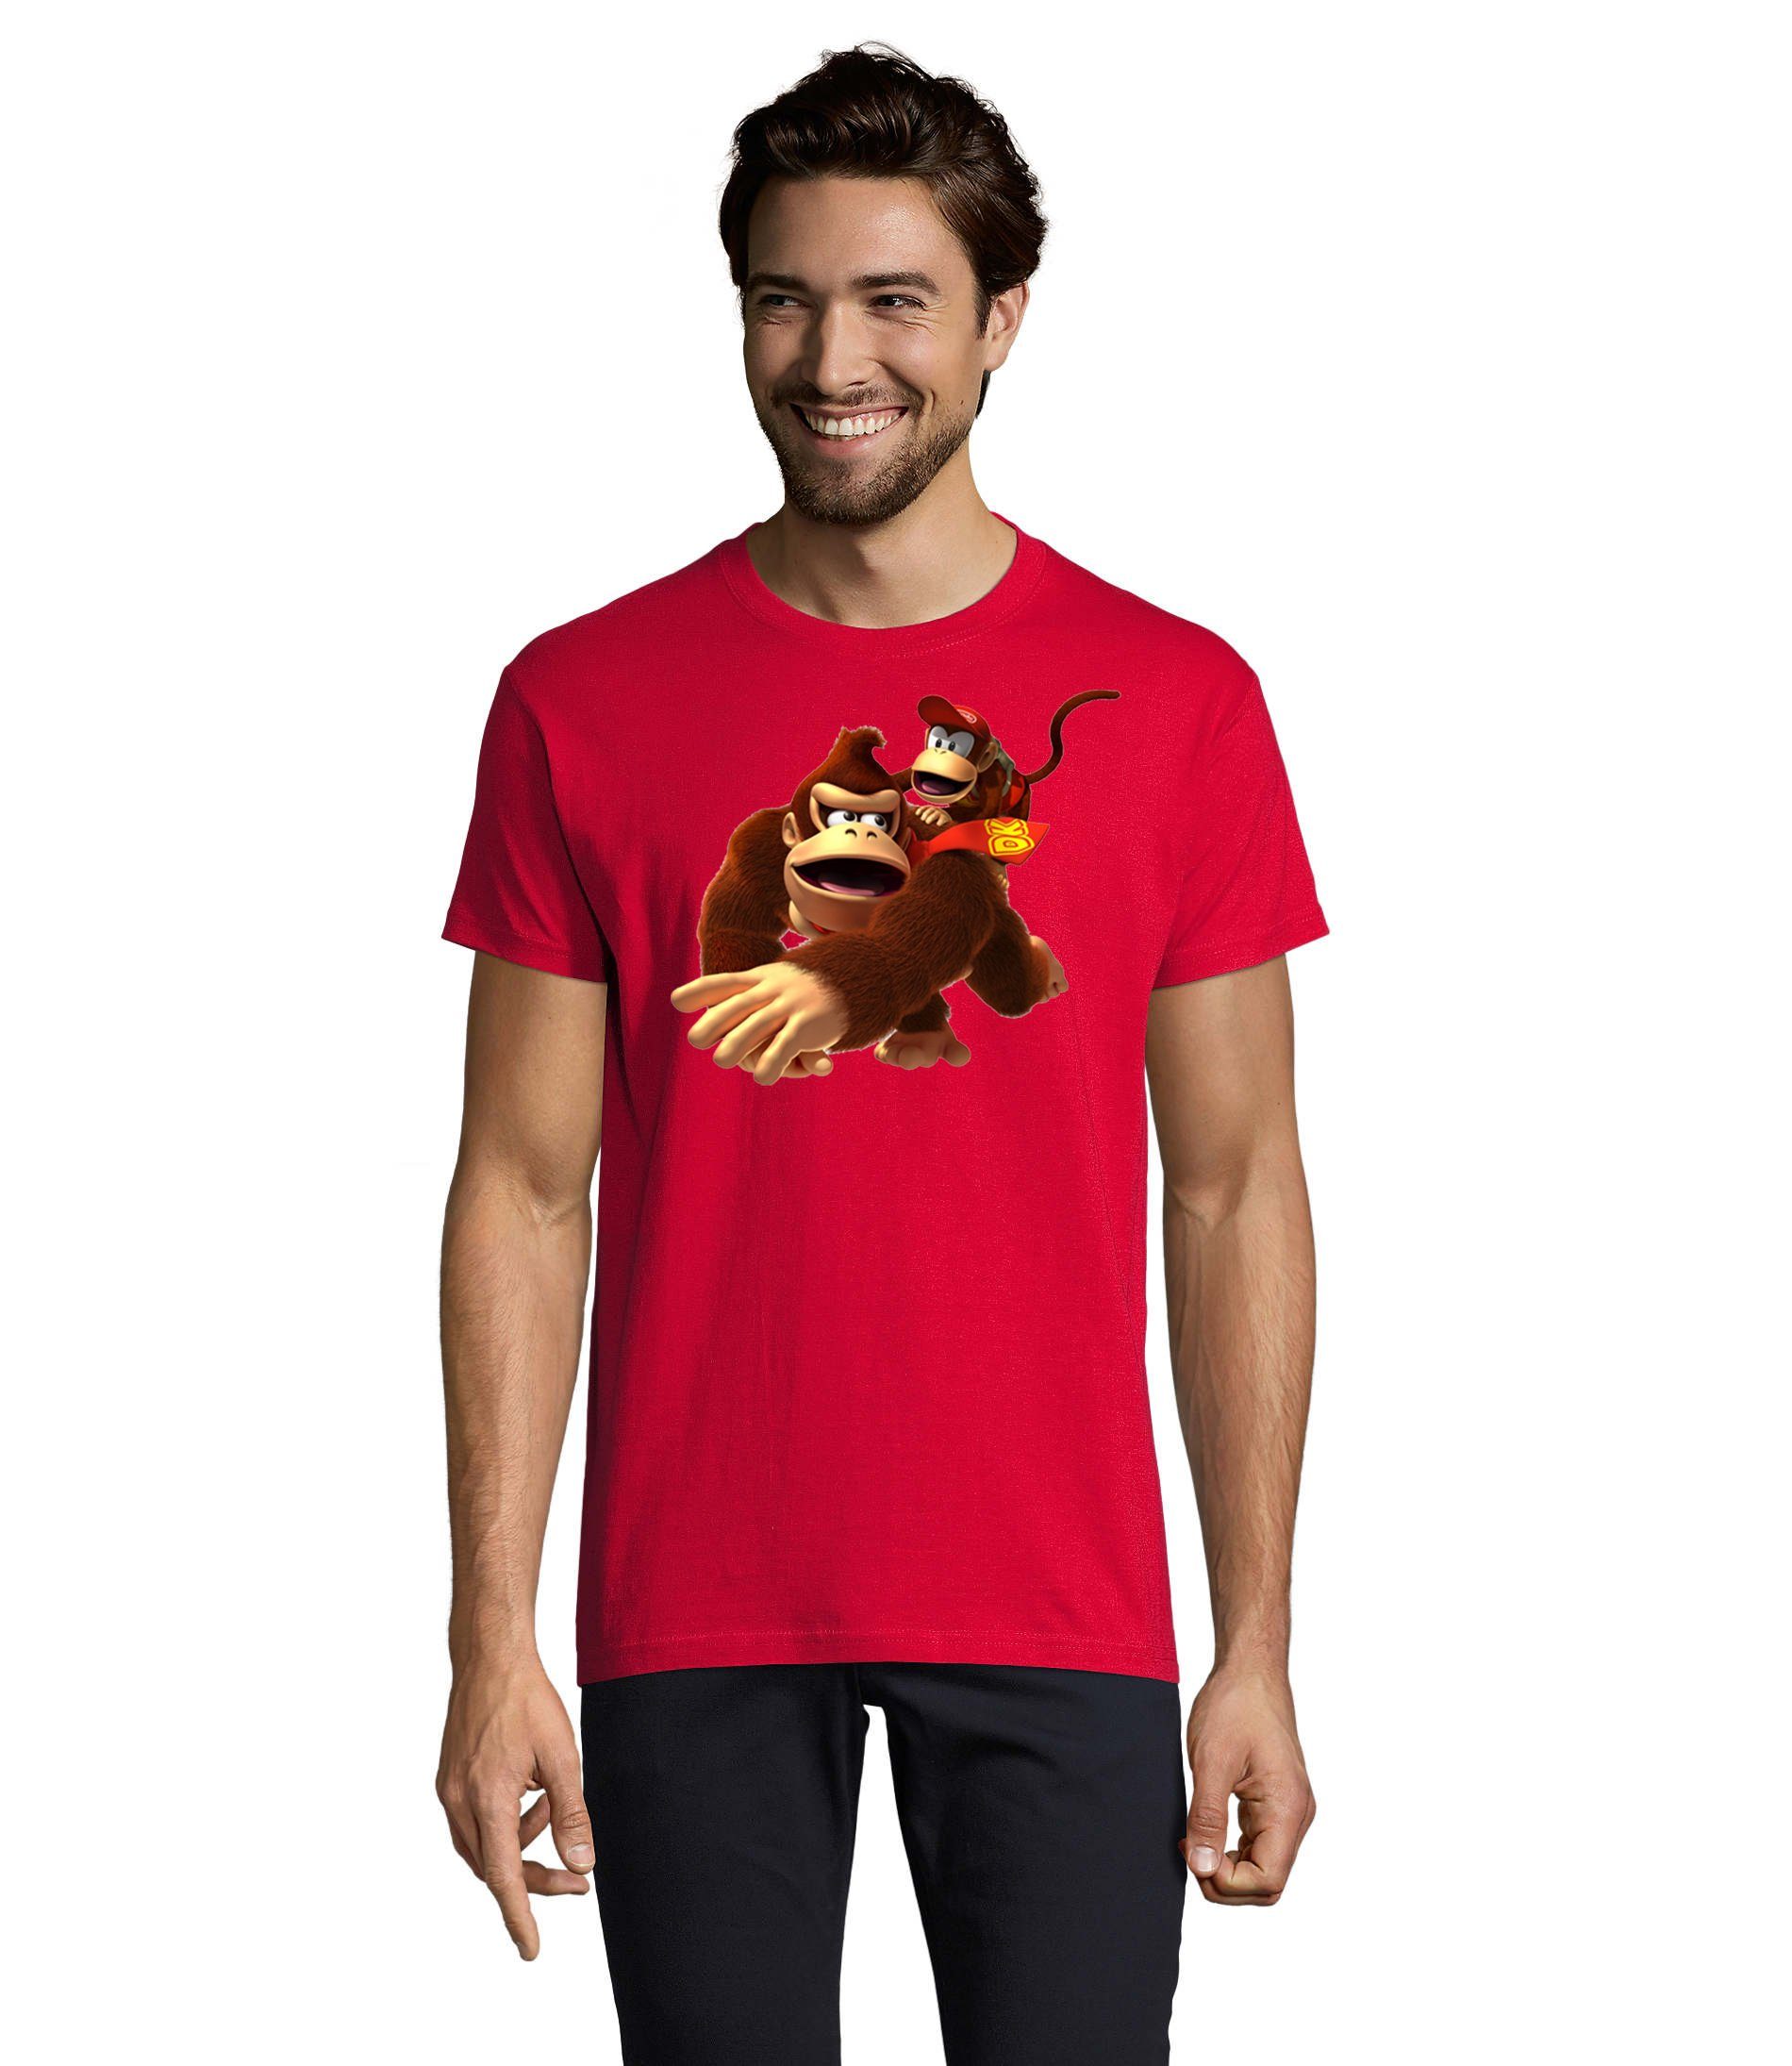 Blondie & Brownie Kong Nintendo T-Shirt Herren Konsole Rot Spiele Diddy Donkey Nerd